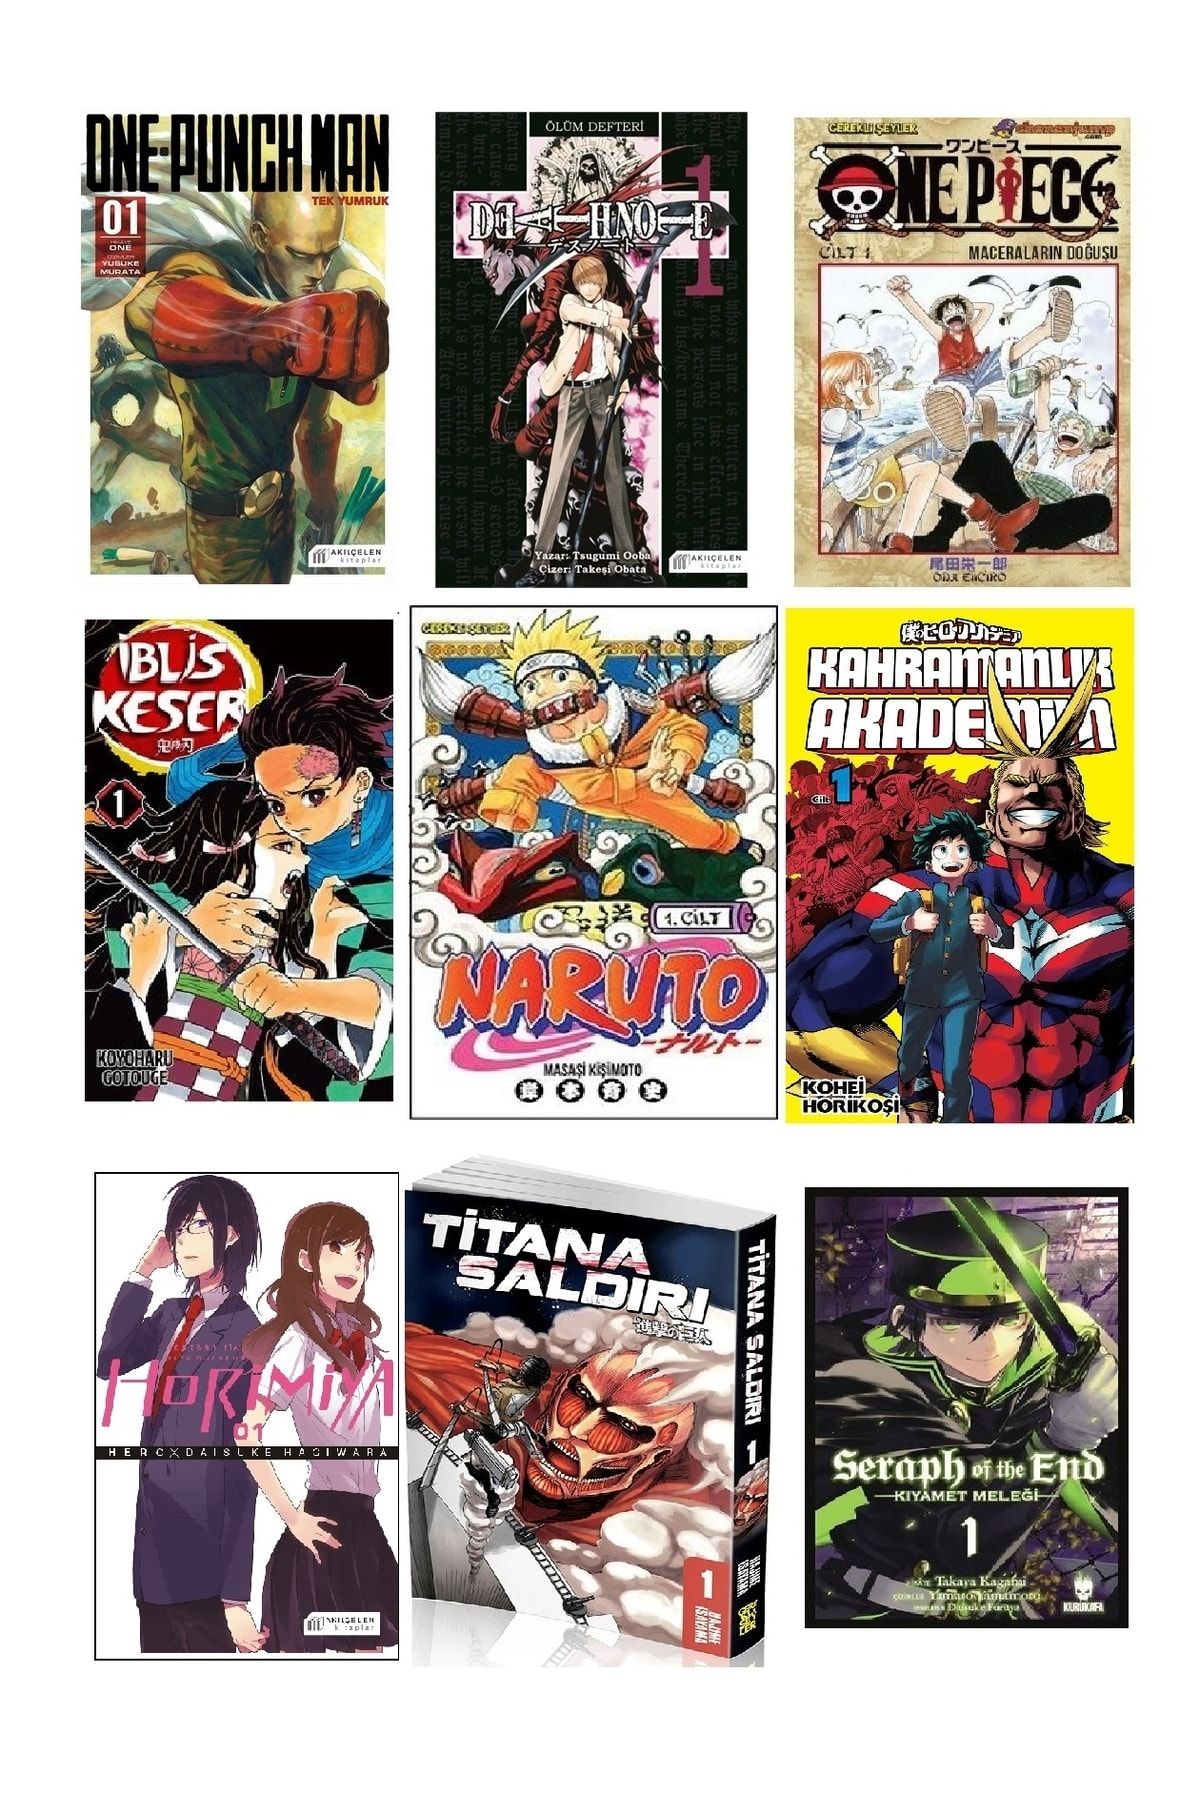 Romans 9 Manga Serisi Ilk Kitaplar Set / Naruto & Iblis Keser & Death Note & One Piece ... Ve Daha Fazlası